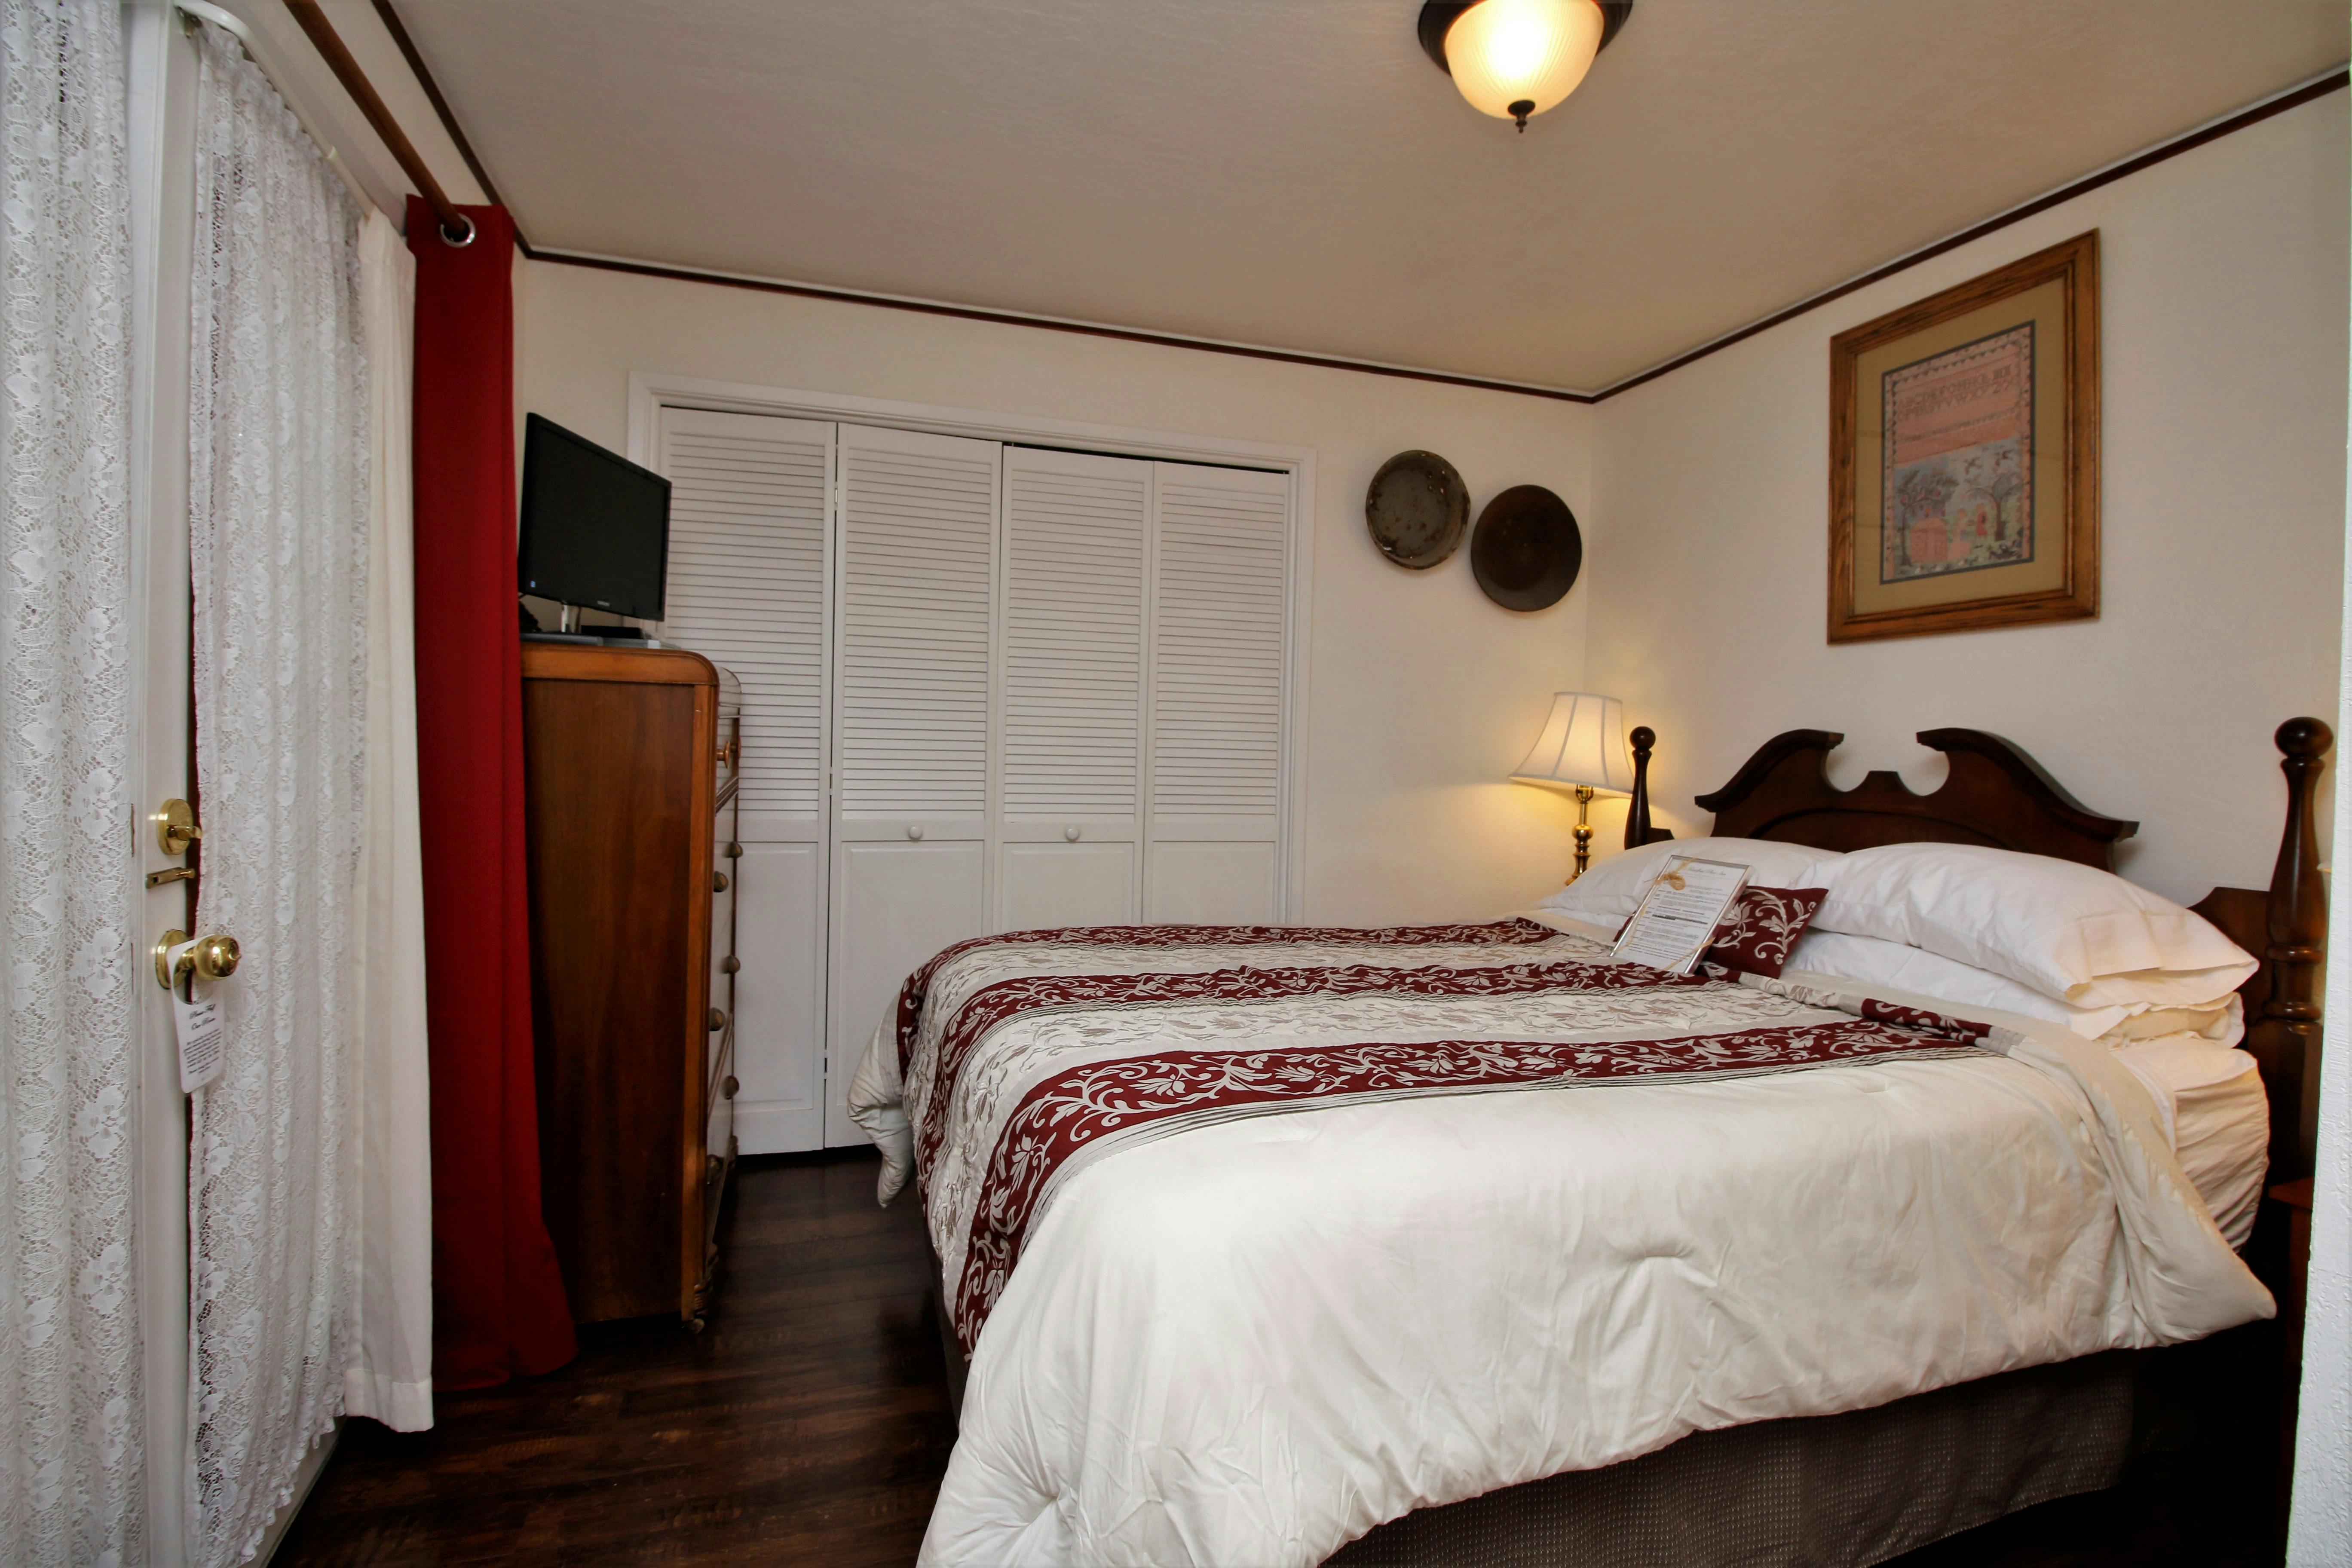 Prospector Room queen bed, closet, and tv